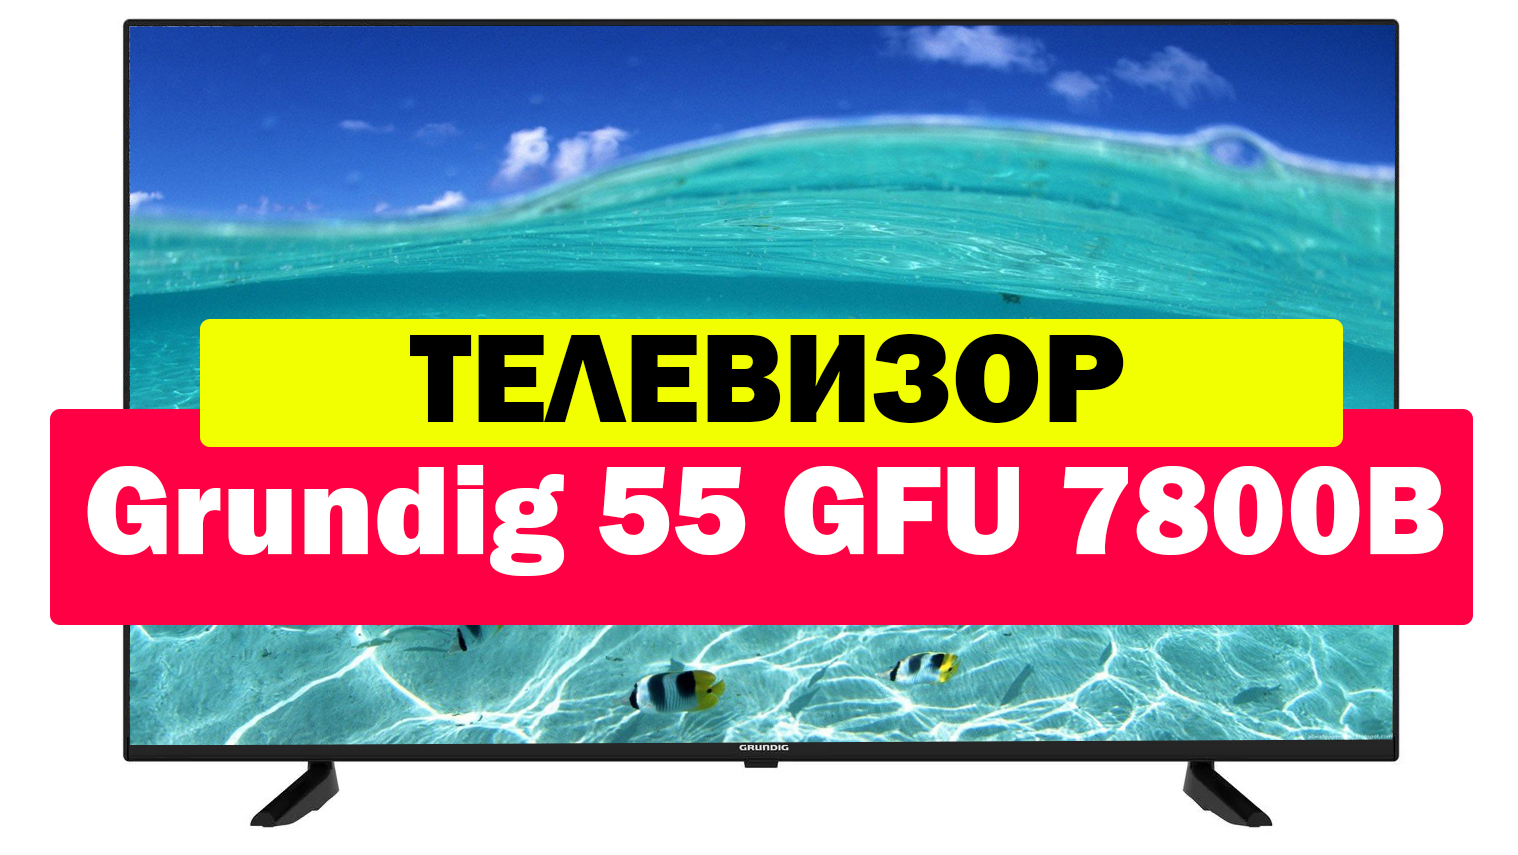 Grundig телевизор ggu 8960. Телевизор Grundig 55. Телевизор Grundig 55 GFU 7800. Телевизор Grundig 55 GFU 7800b отзывы. Телевизор Grundig 55 GFU 7800b обзор.